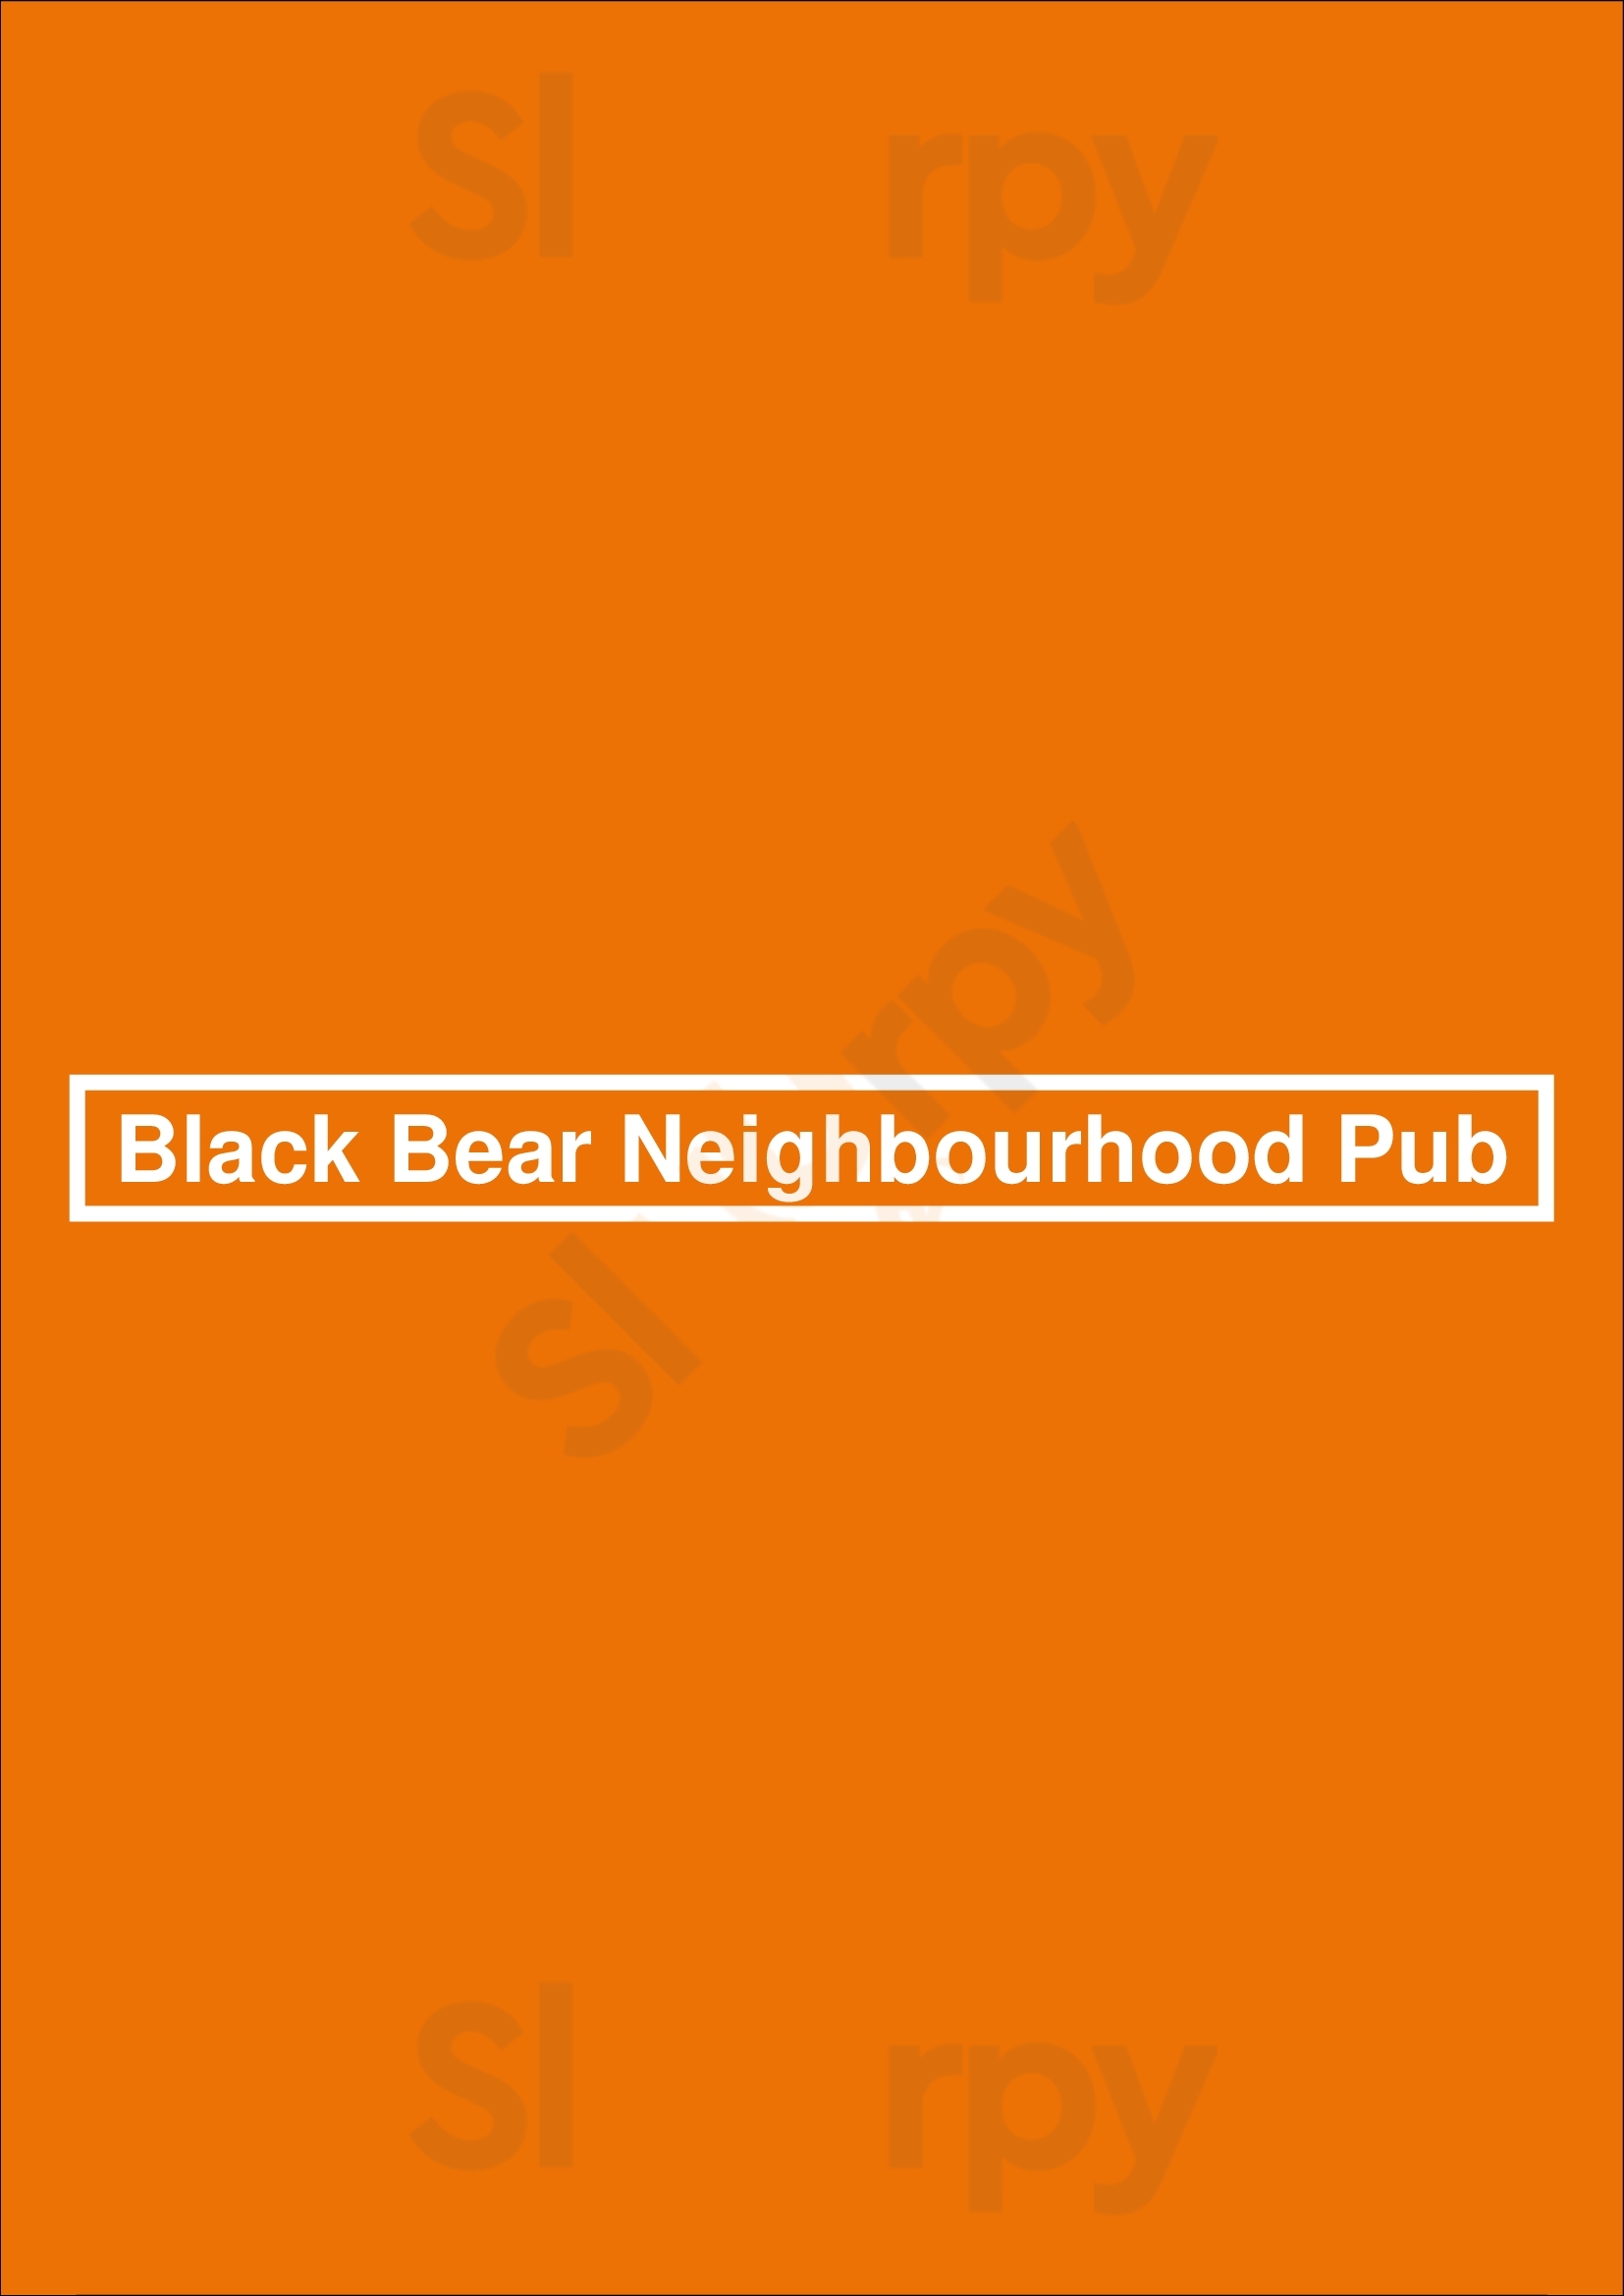 Black Bear Neighbourhood Pub North Vancouver Menu - 1